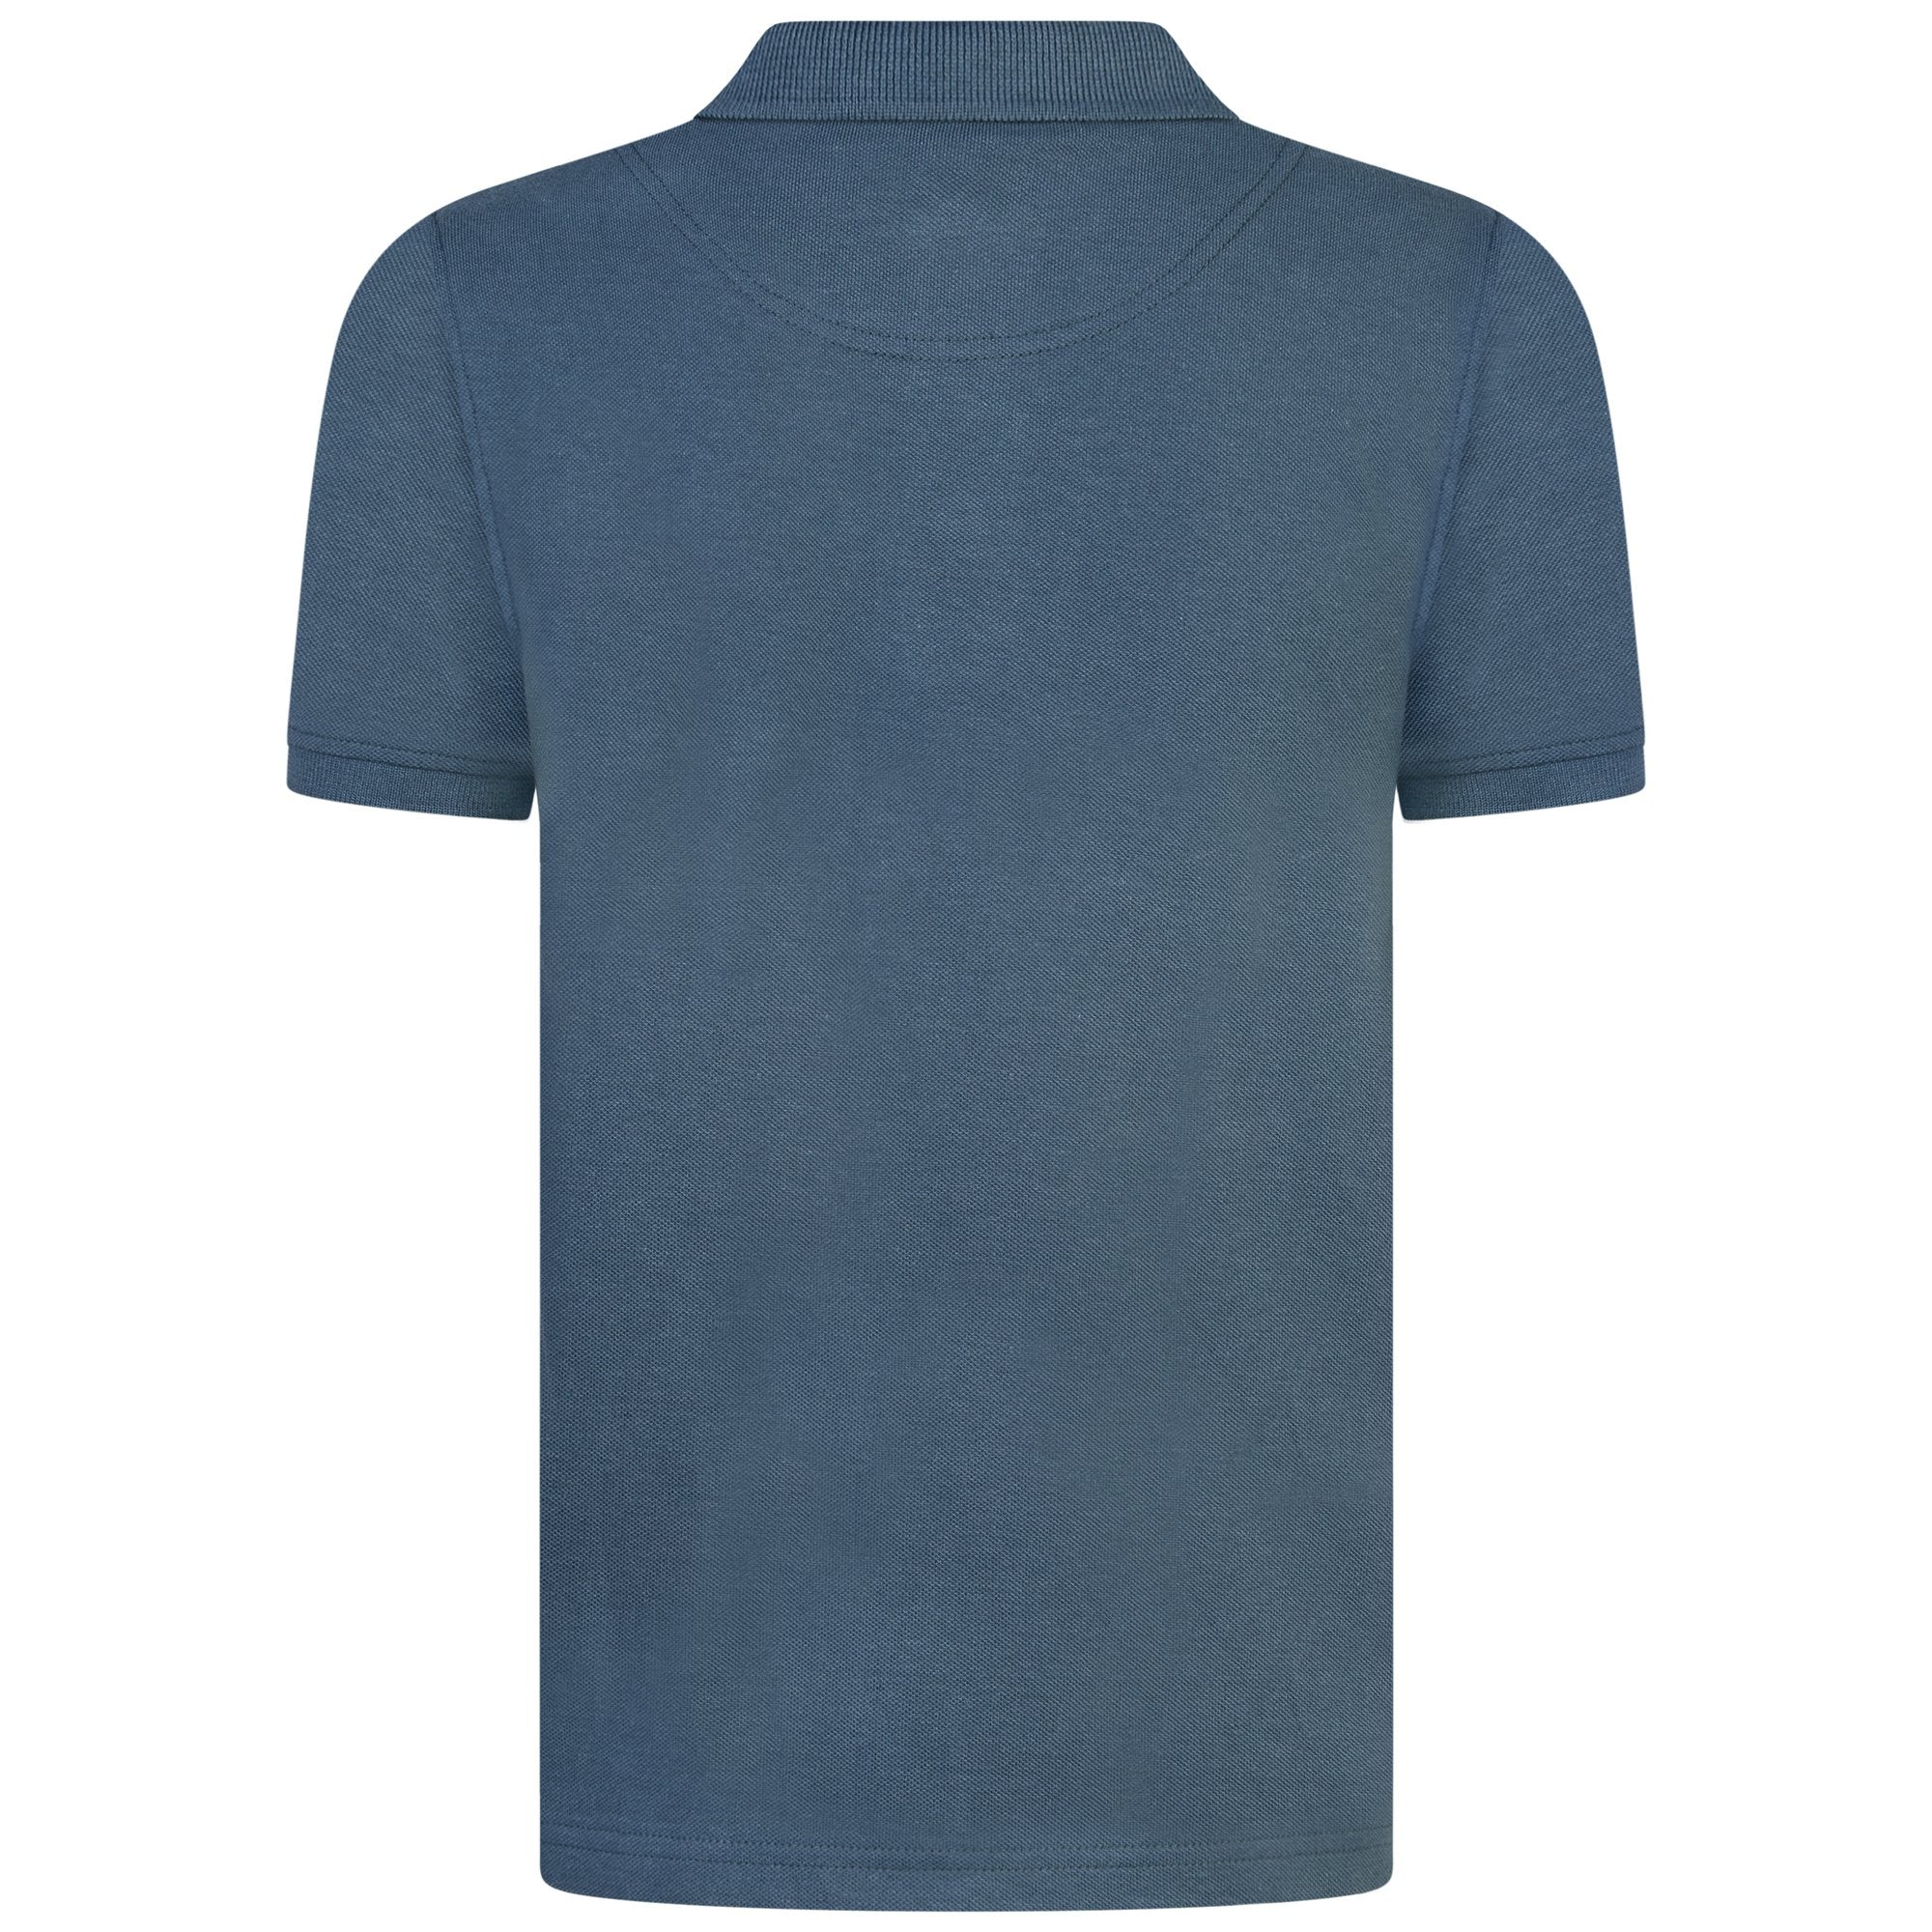 Jongens Classic Polo Shirt Orion Blue van Lyle & Scott in de kleur Orion Blue in maat 170-176.